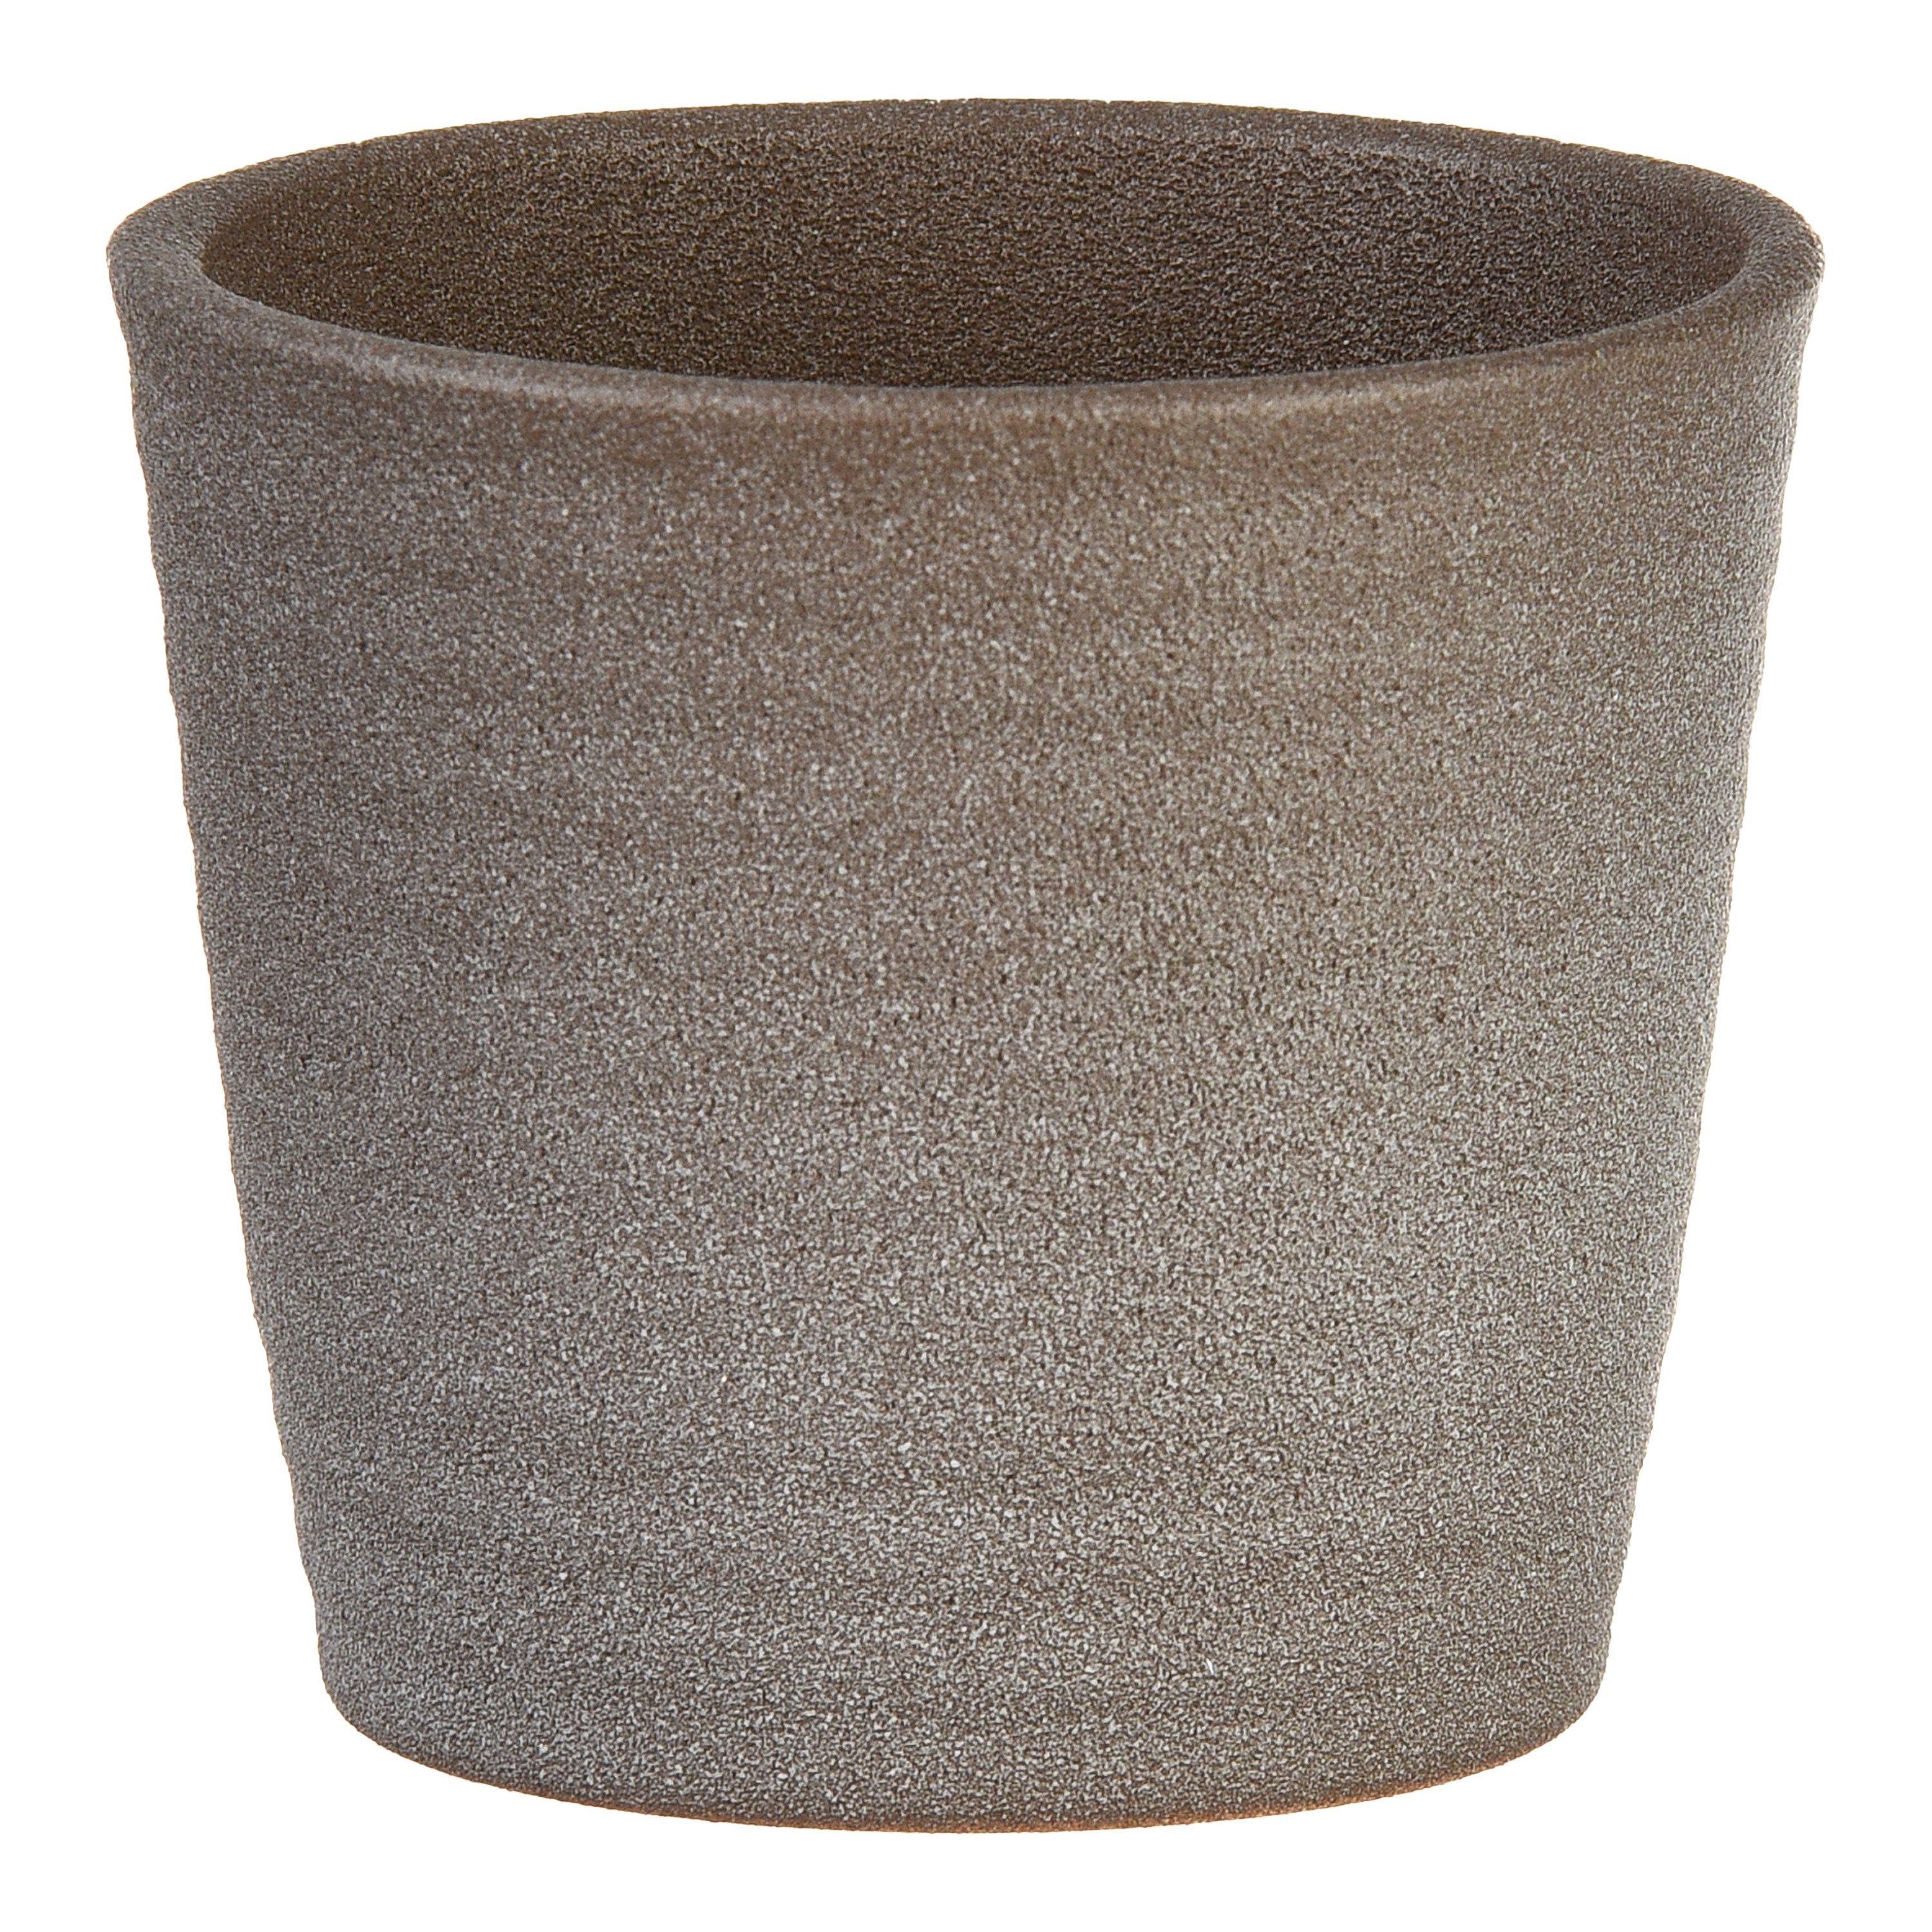 1 Übertopf Zentimeter Grau Übertopf 7 H Zentimeter, 6 Keramik, Stone Ø Übertopf), Nature aus Depot (Packung,